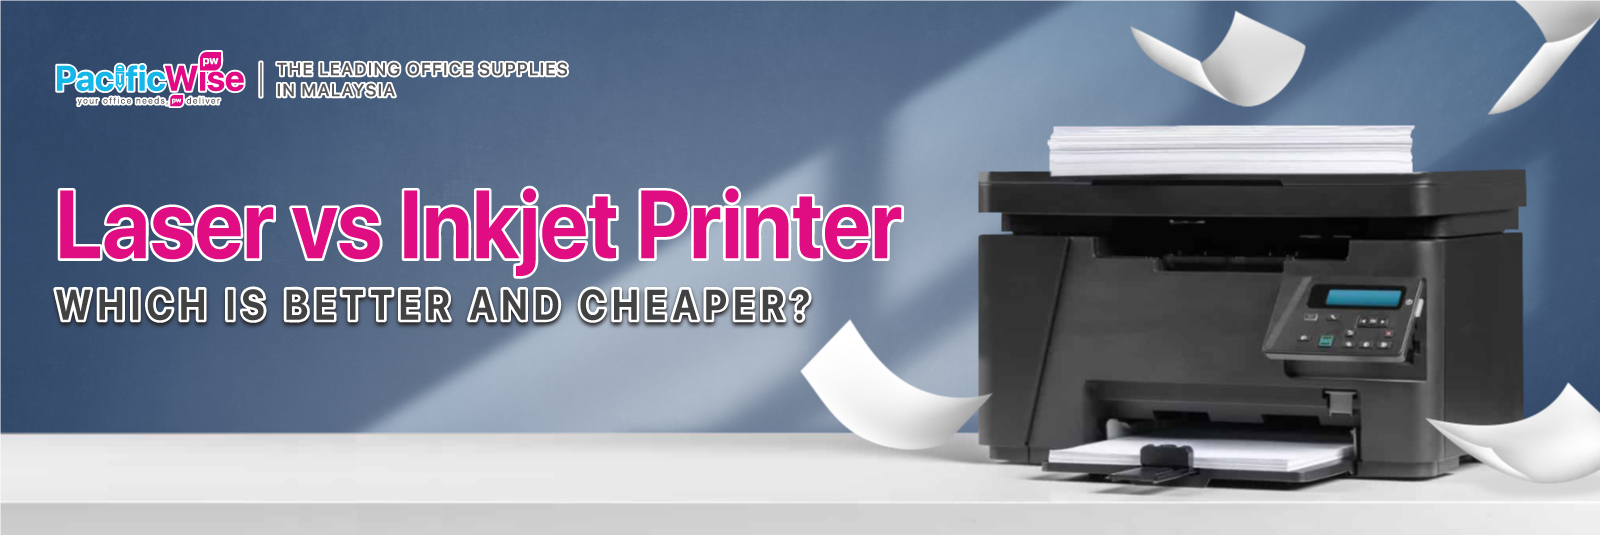 laser vs inkjet printer which is better and cheaper?